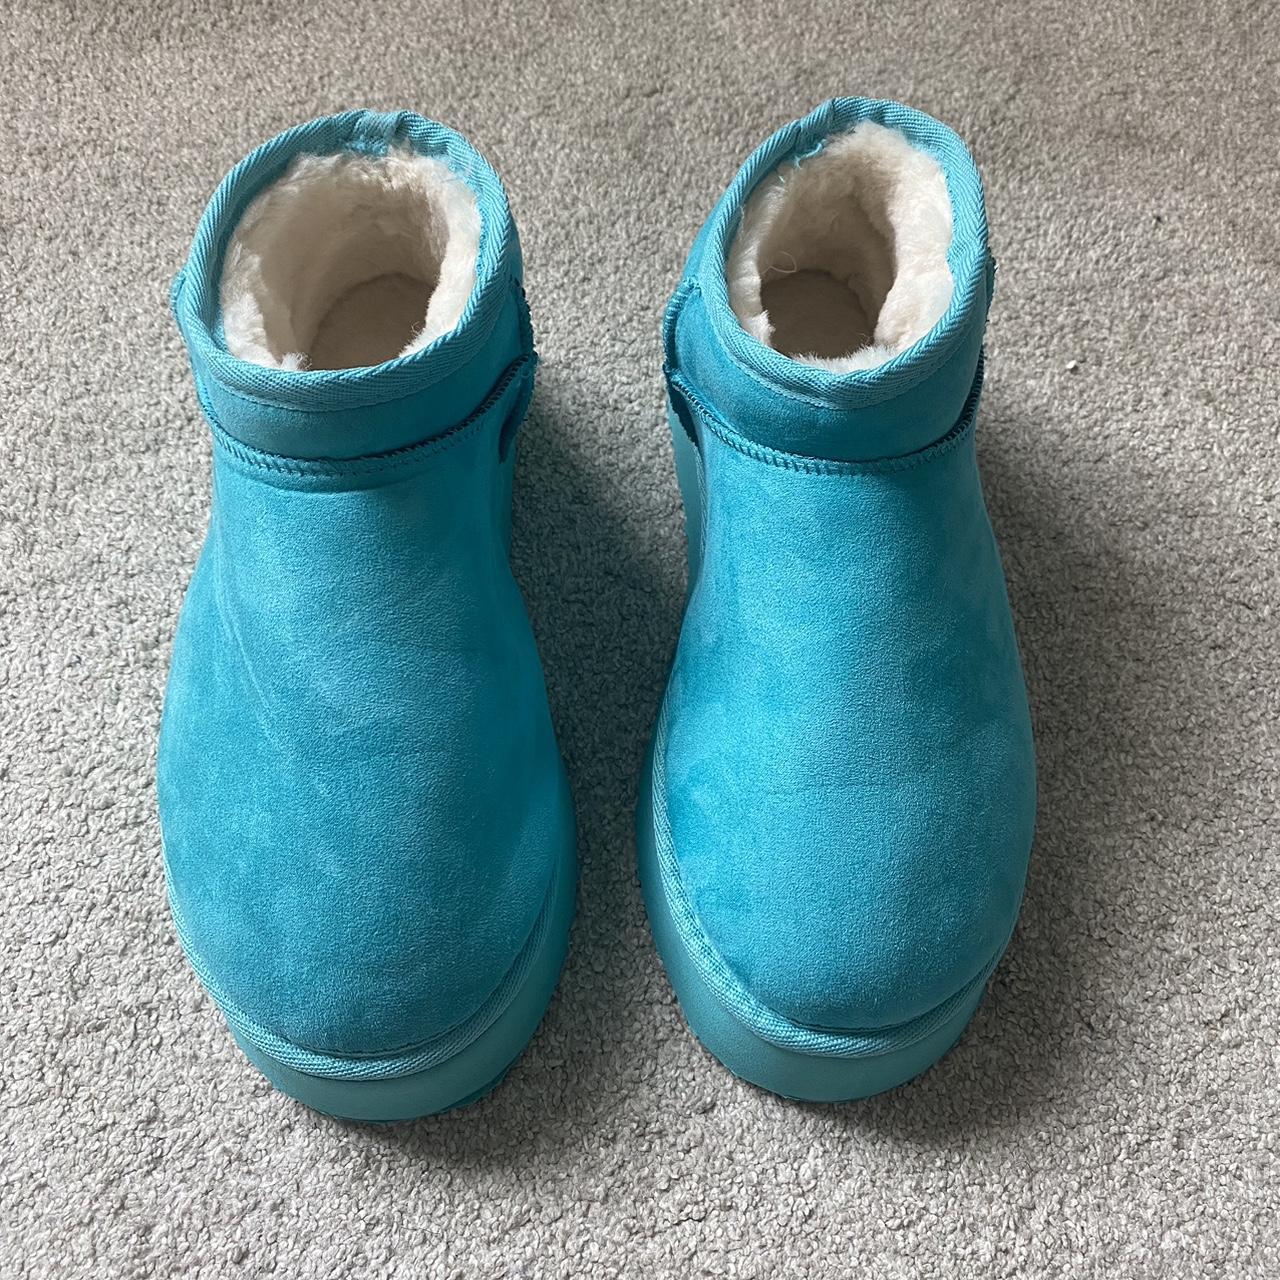 EGO Women's Blue Boots (4)